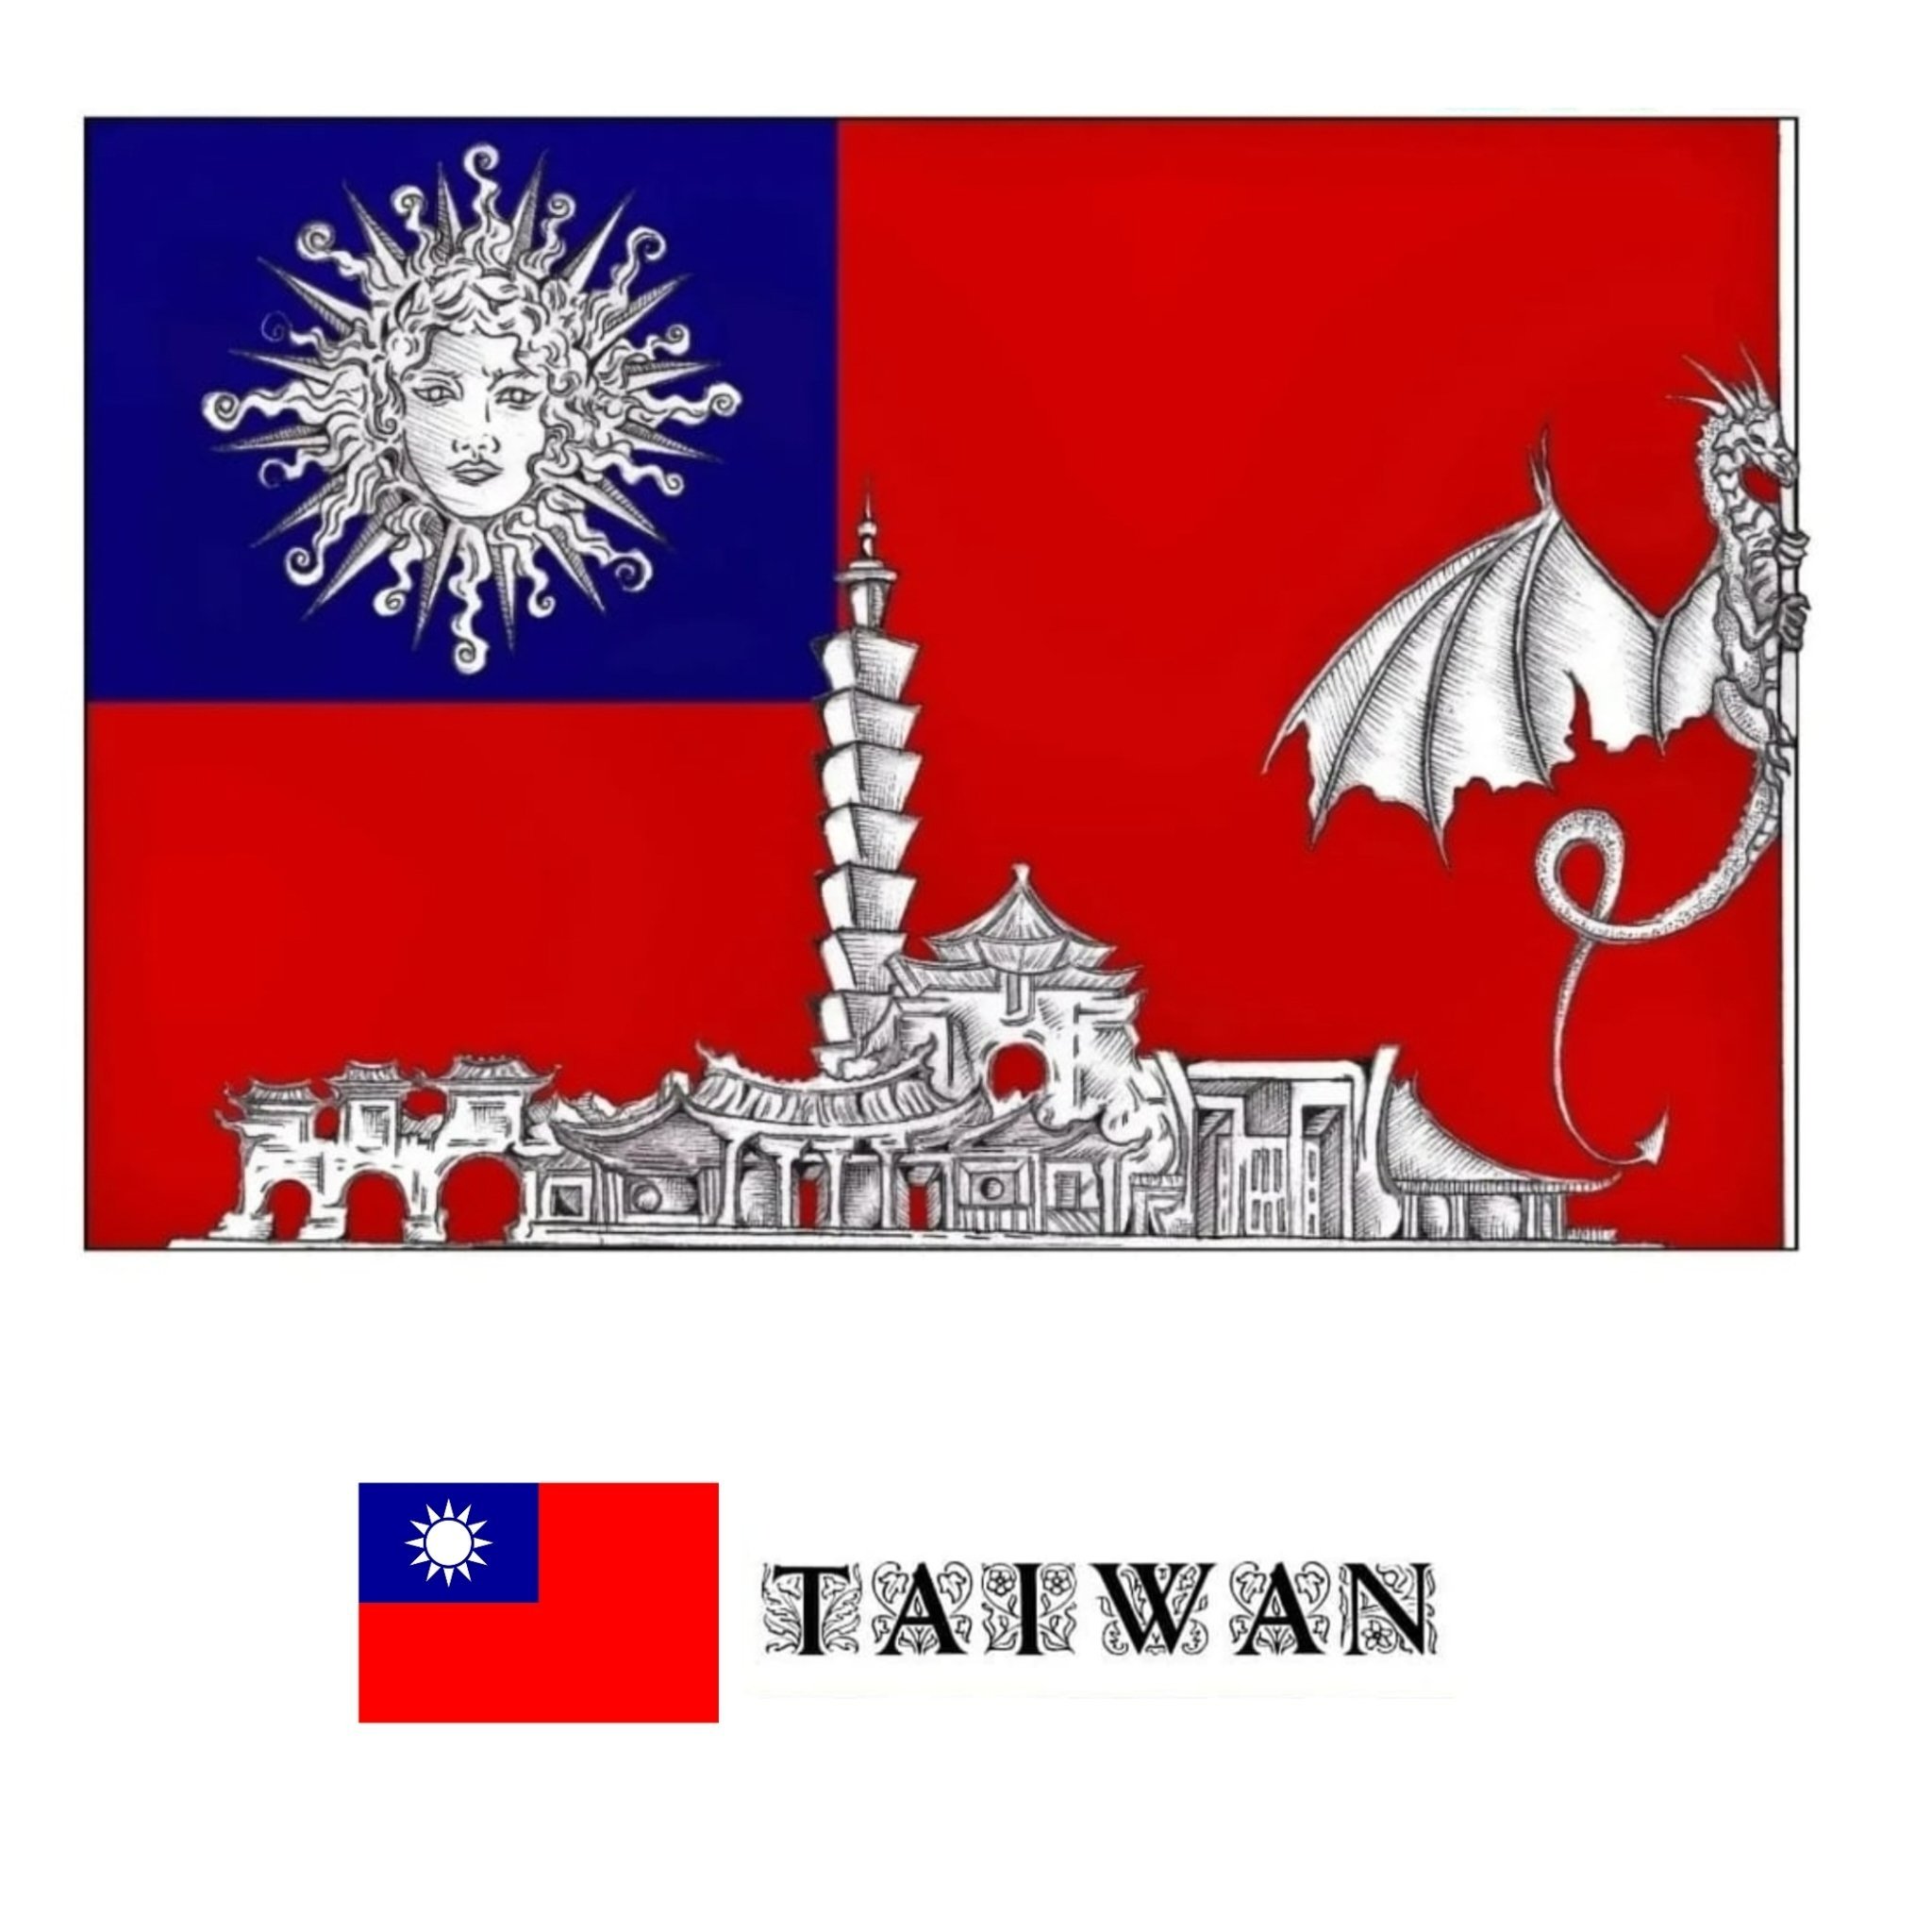 43 - East Taiwan